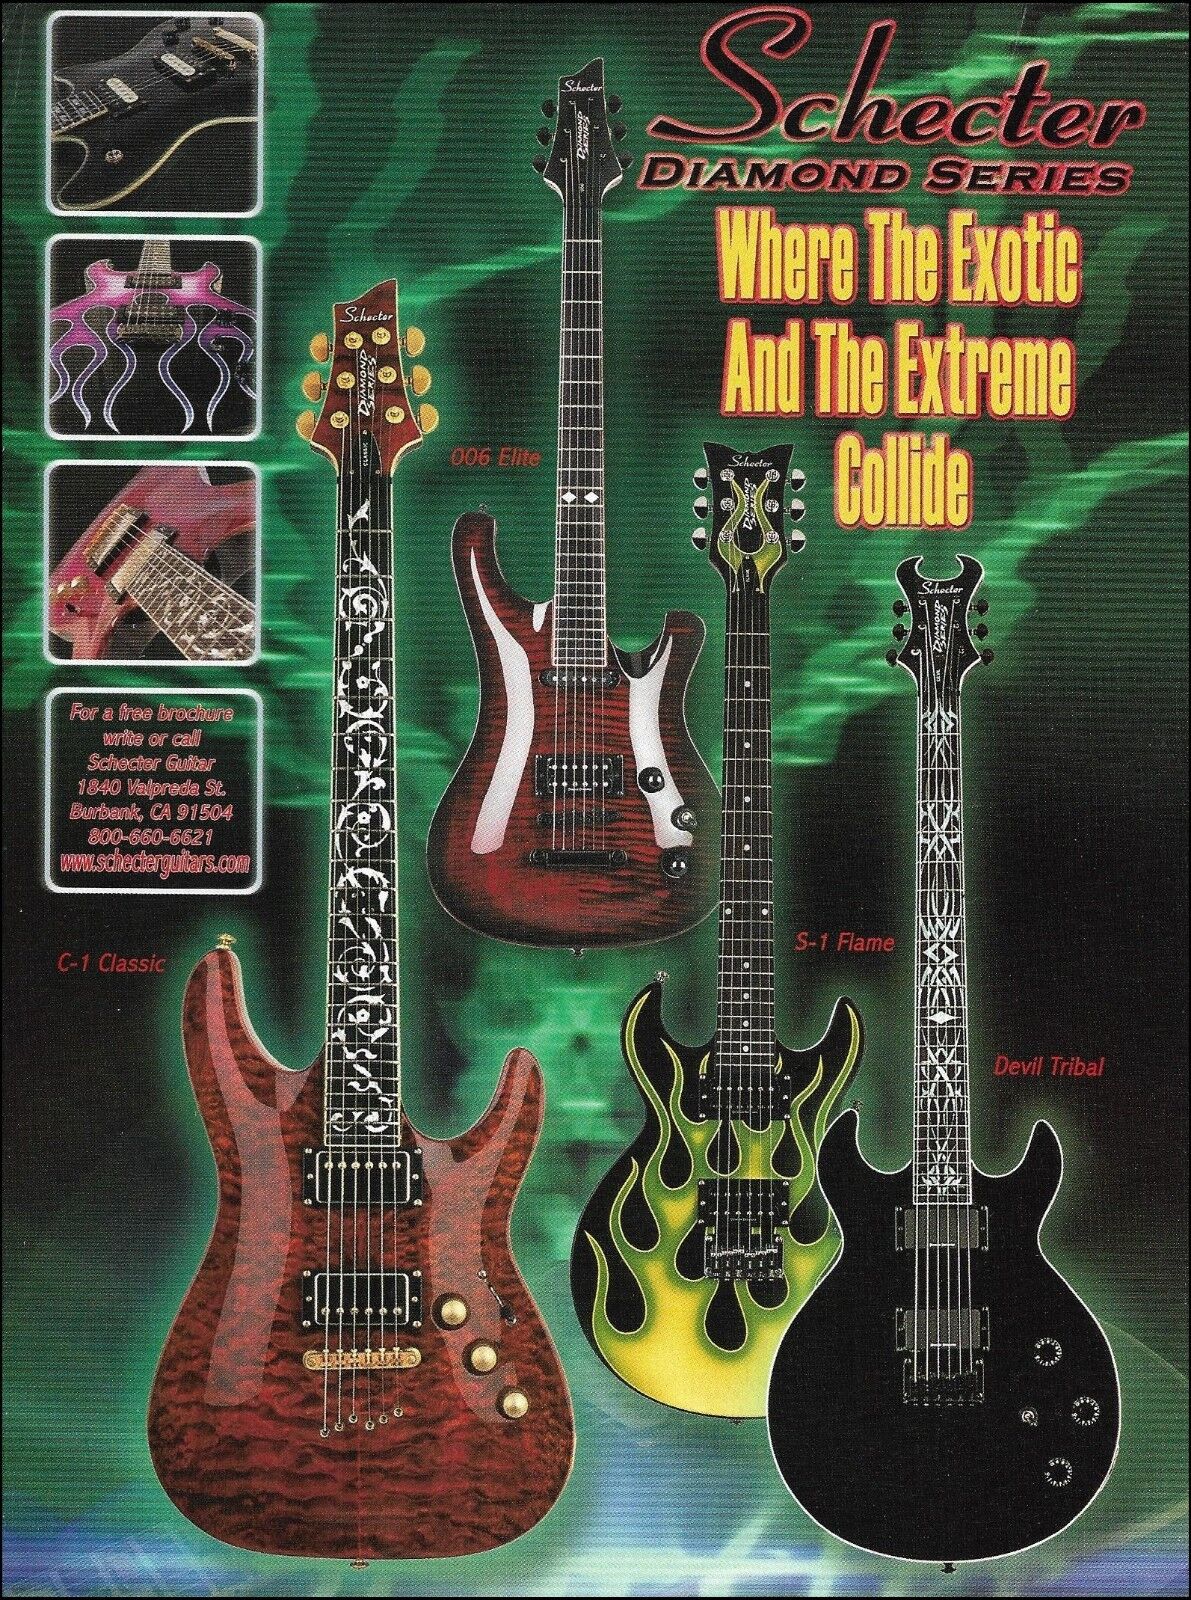 Schecter guitar C-1 Classic 006 Elite S-1 Flame Devil Tribal series ad print